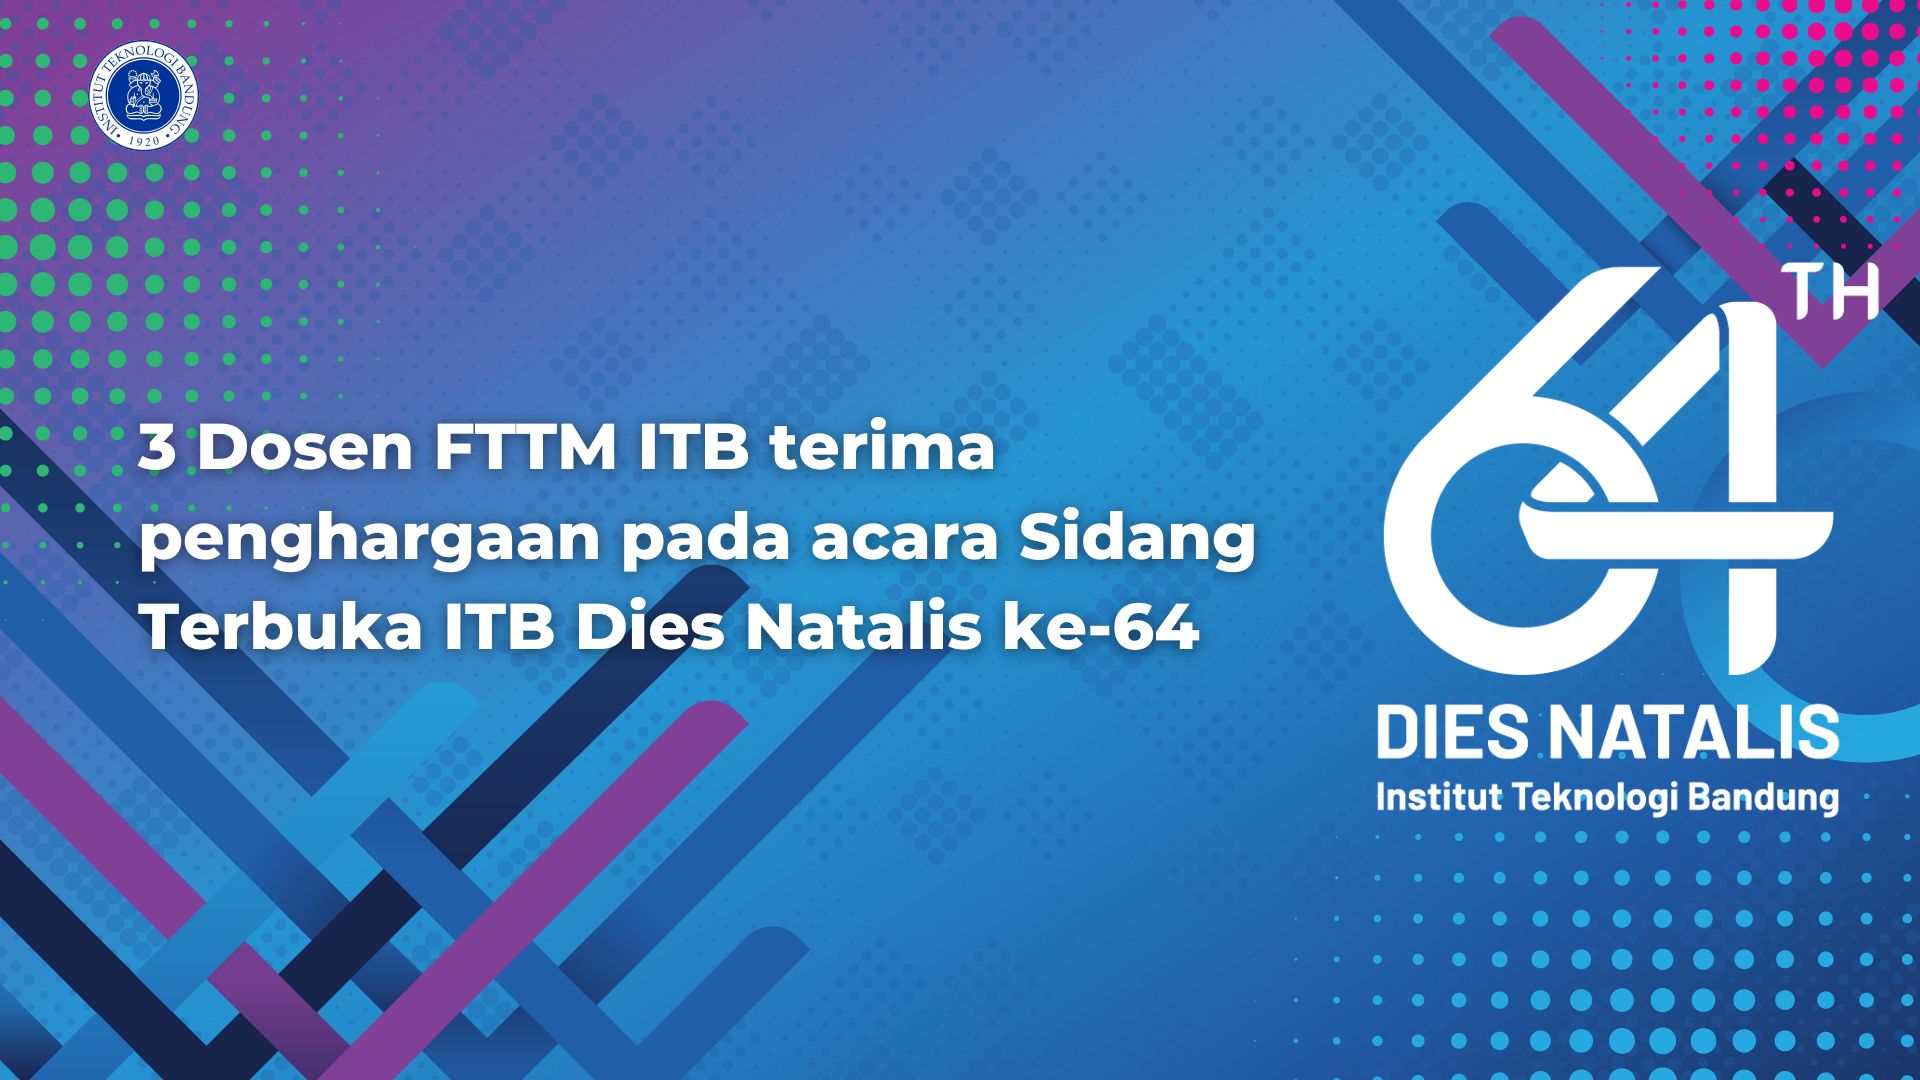 3 Dosen FTTM ITB terima penghargaan pada acara Sidang Terbuka ITB Dies Natalis ke-64